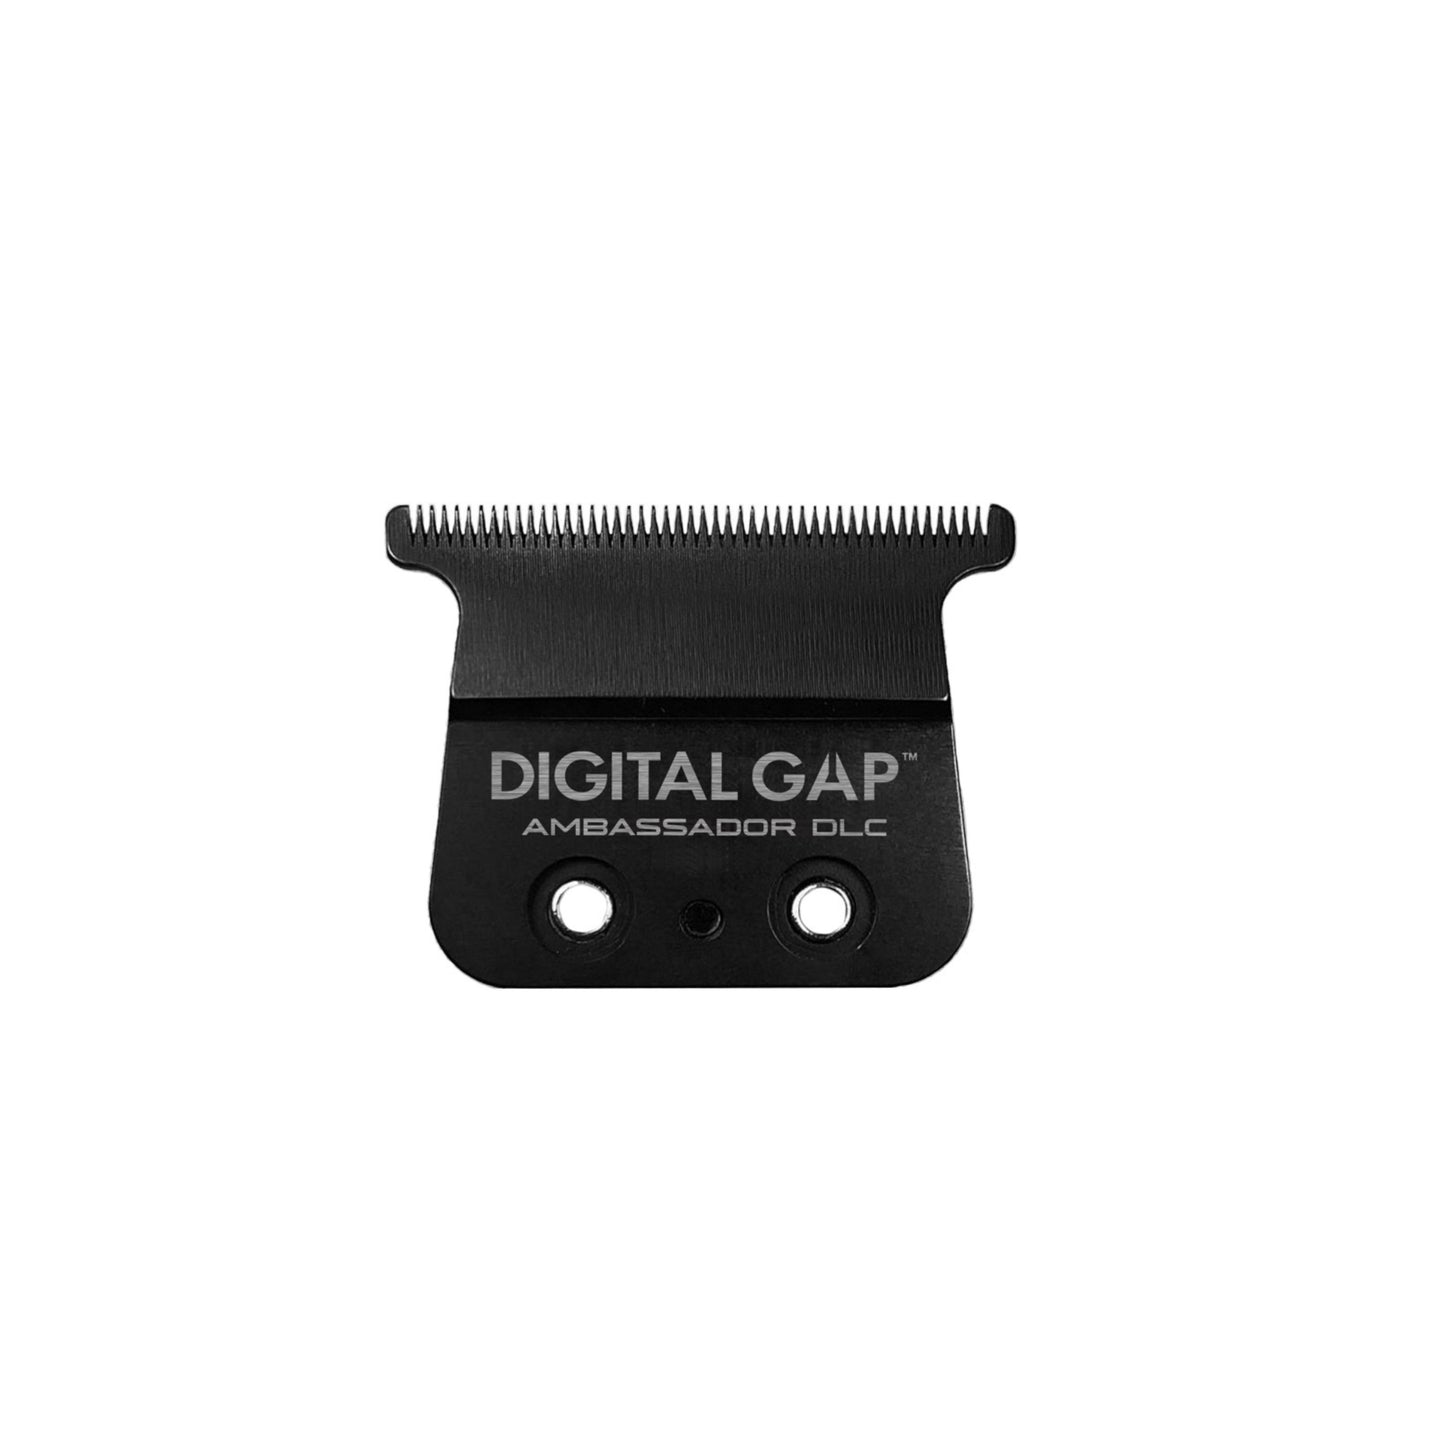 Digital gap ambassador dlc blade